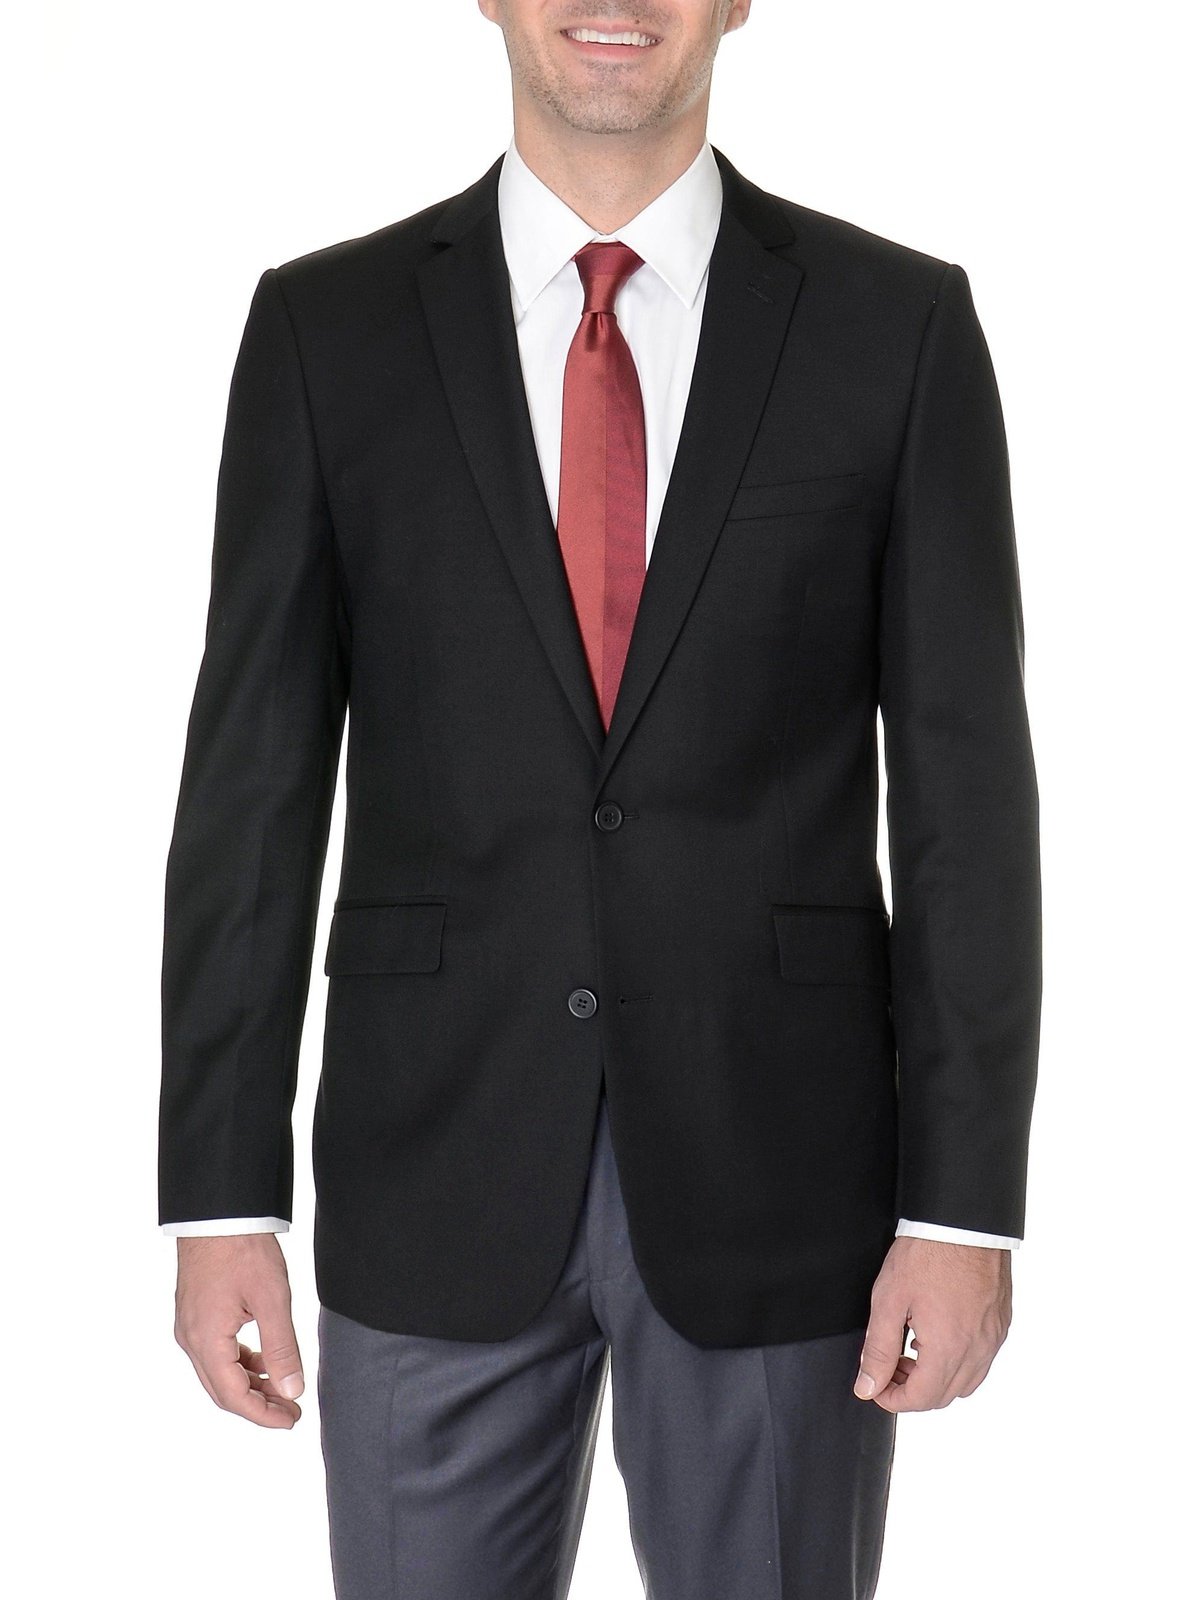 Michael Kors BLAZERS Micheal Kors Modern Fit Solid Black Two Button Wool Blend Blazer Suit Jacket